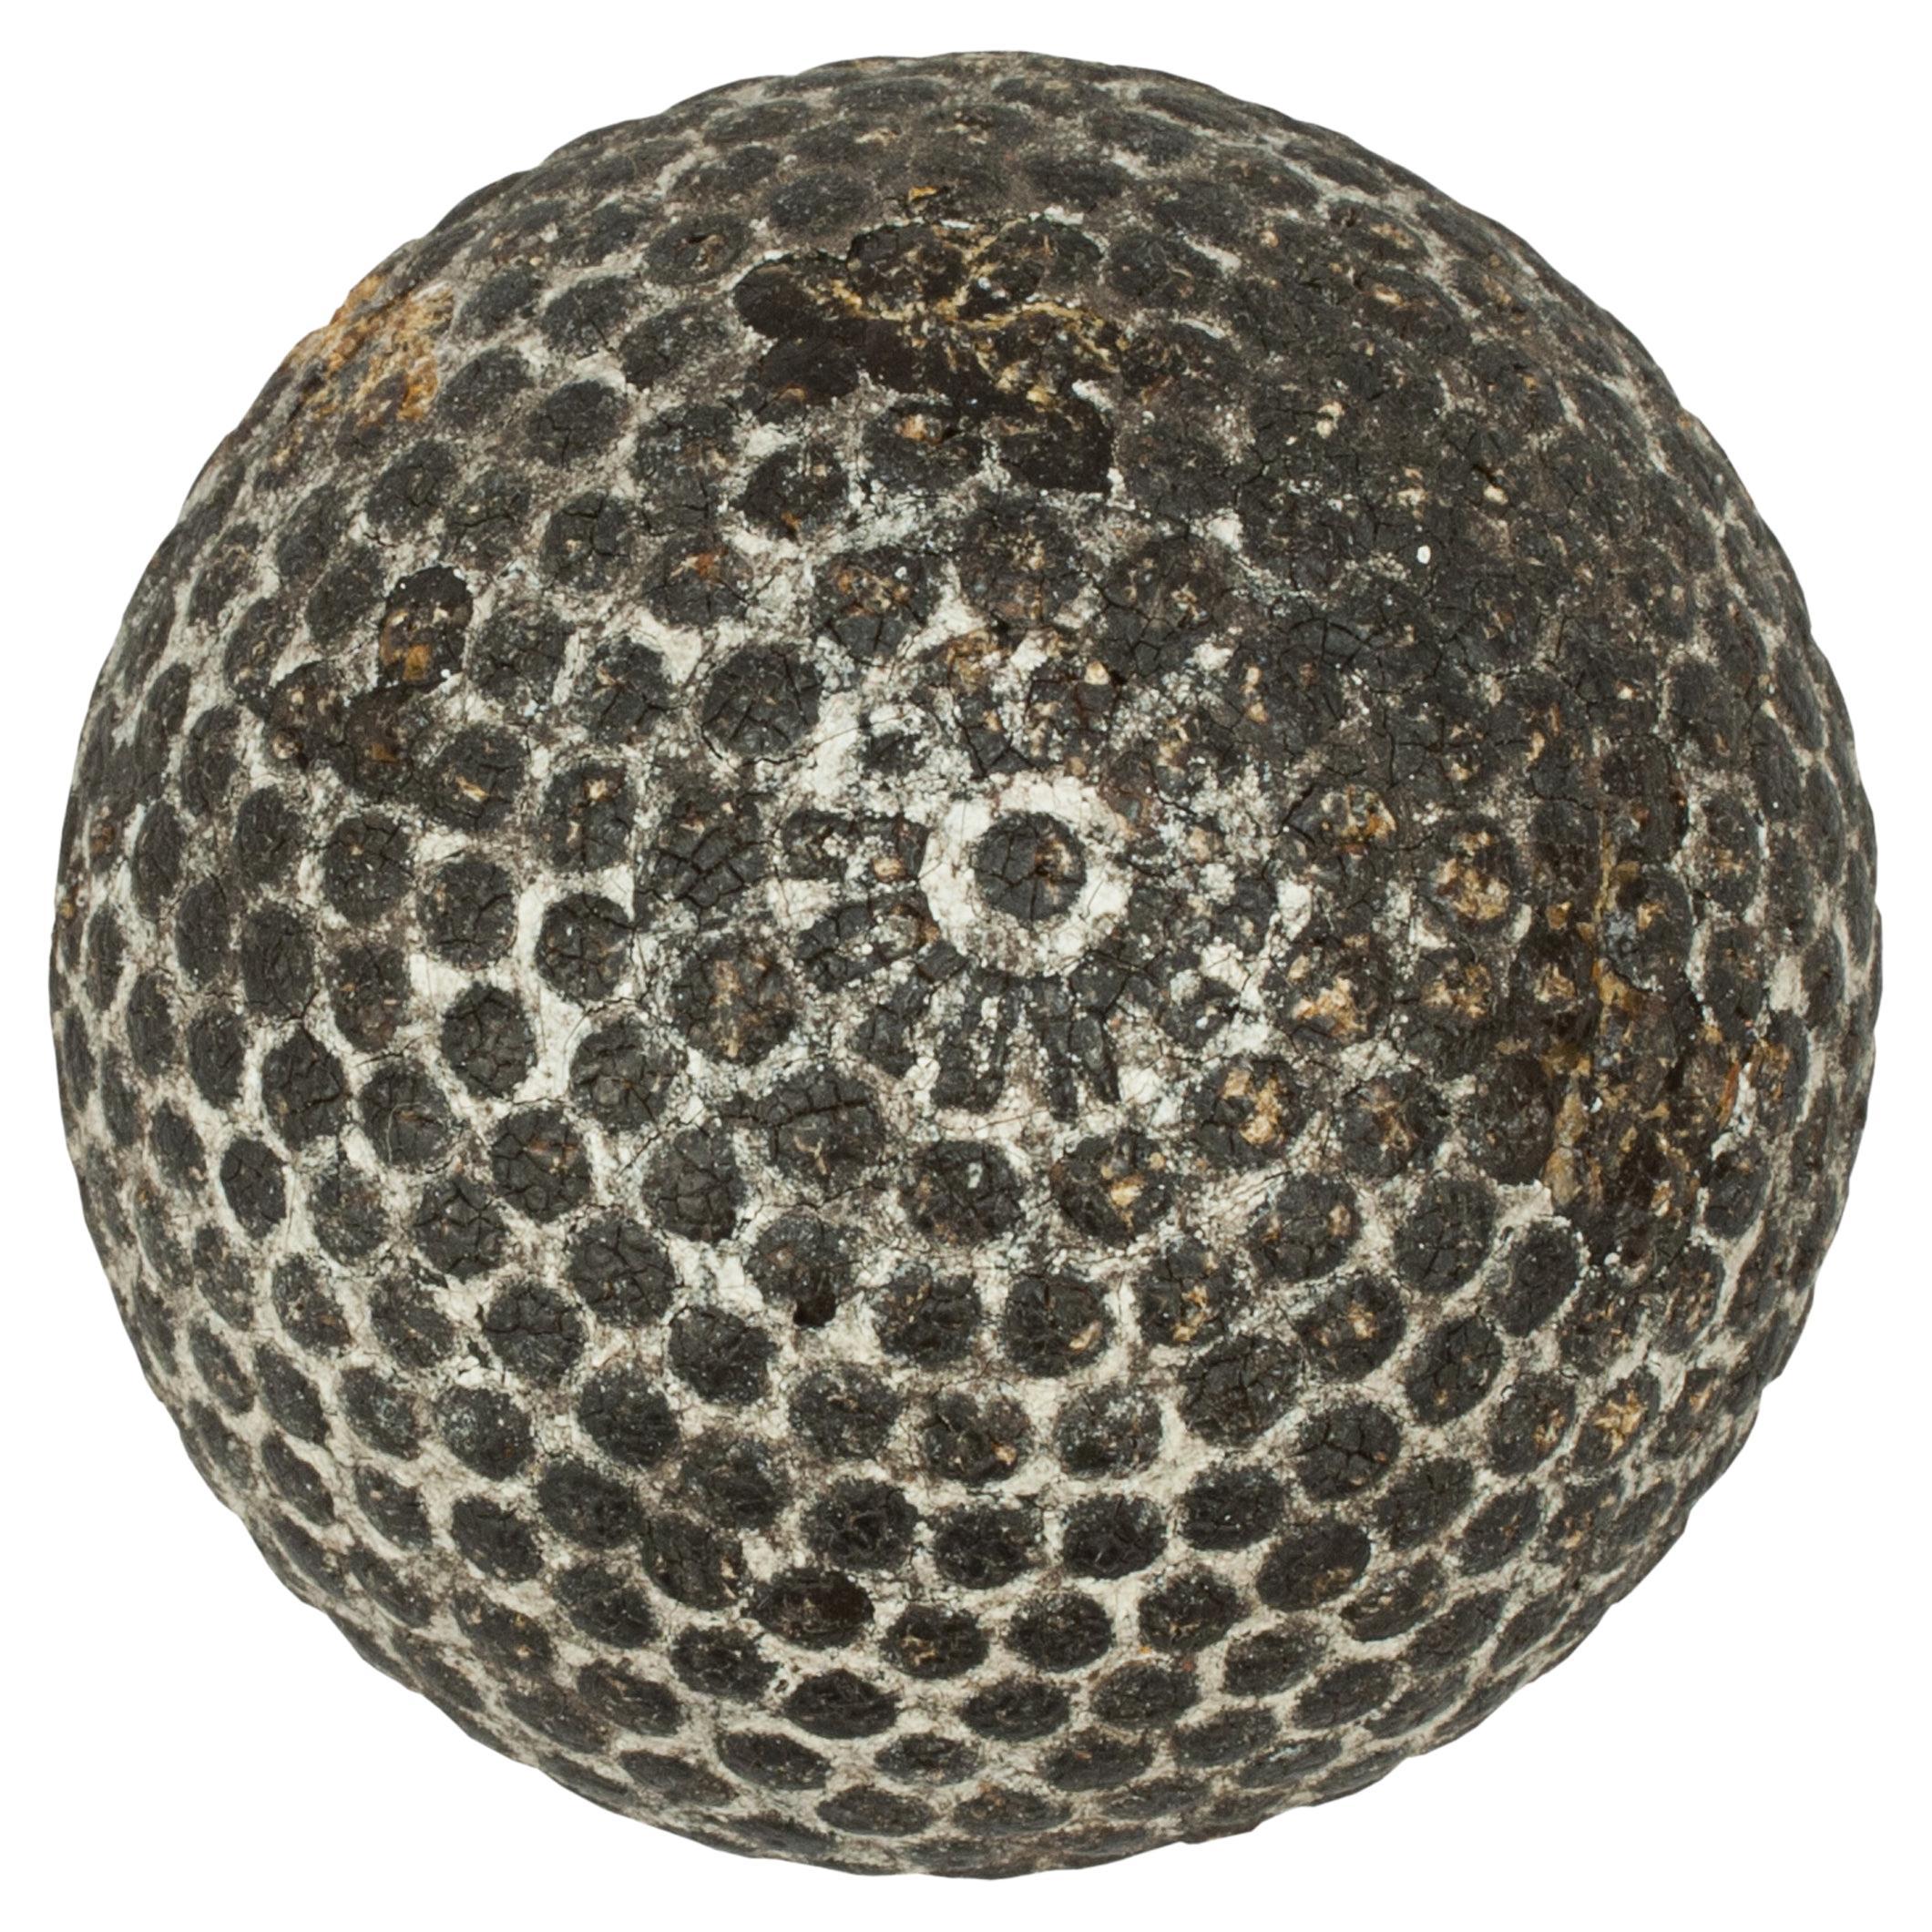 Vintage Bramble Golf Ball, St. Mungo Colonel Golf Ball